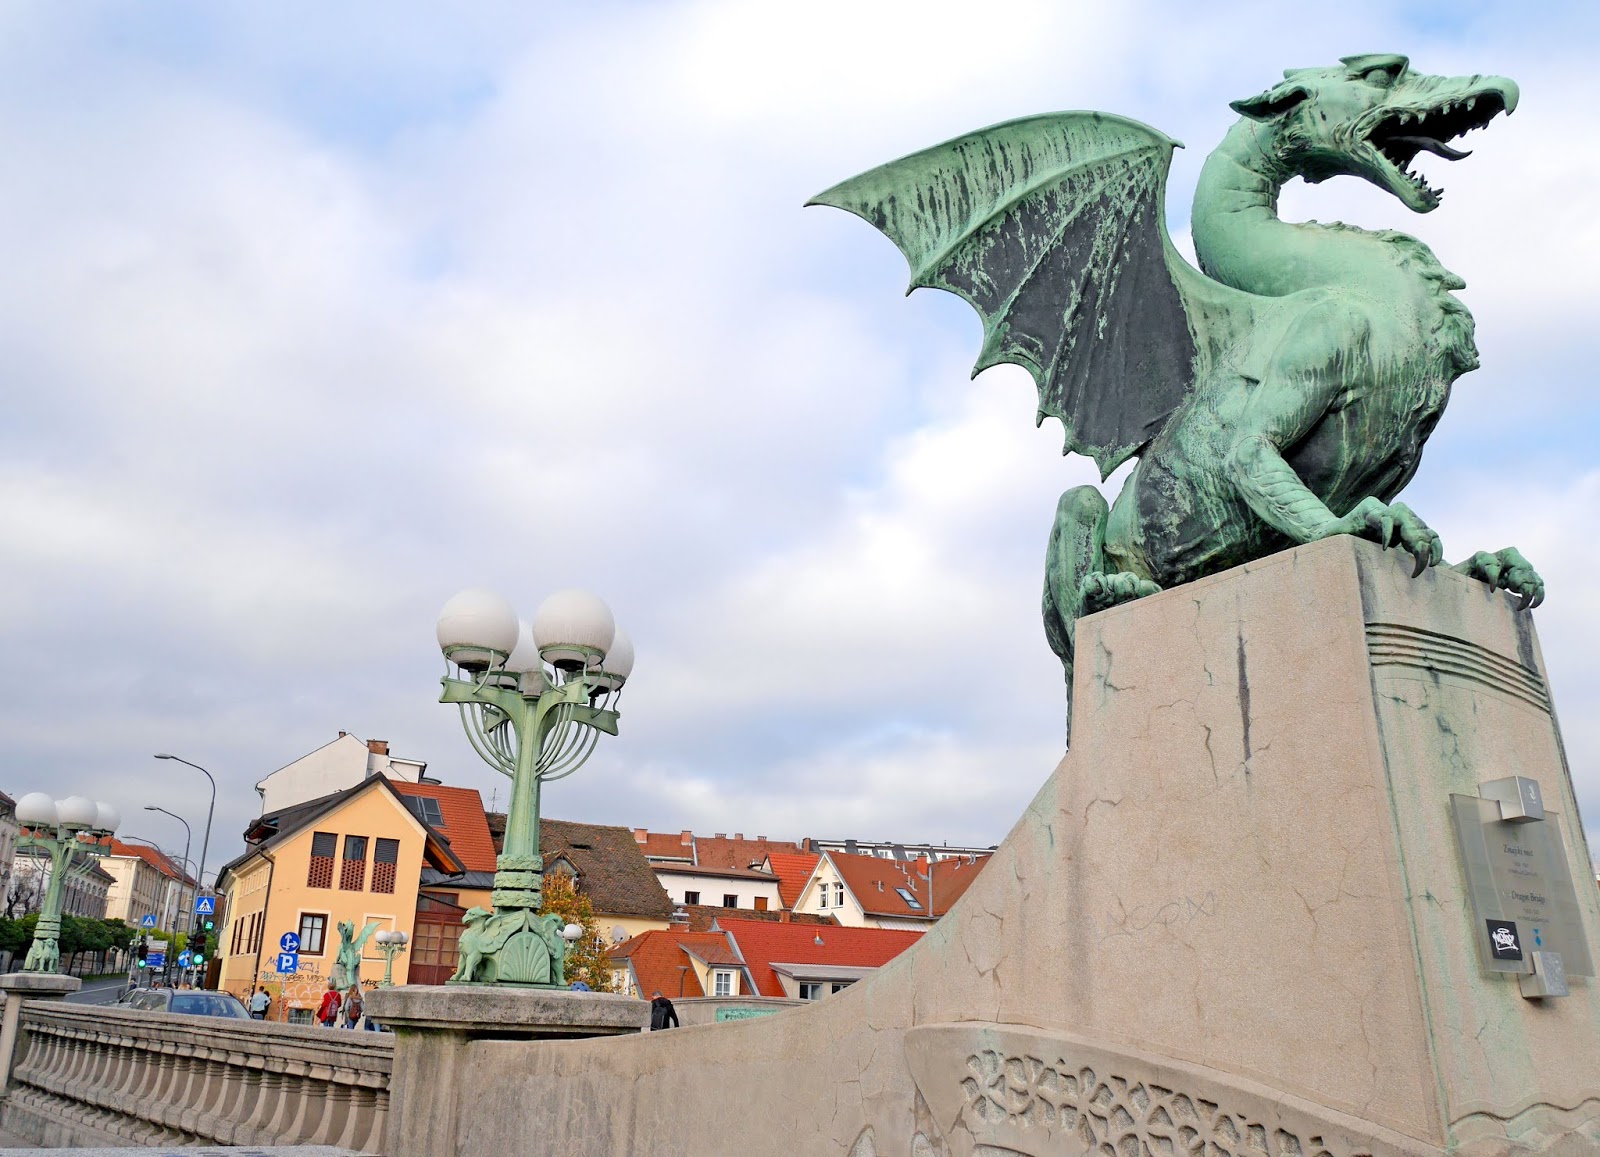 The Dragon Bridge, Ljubljana